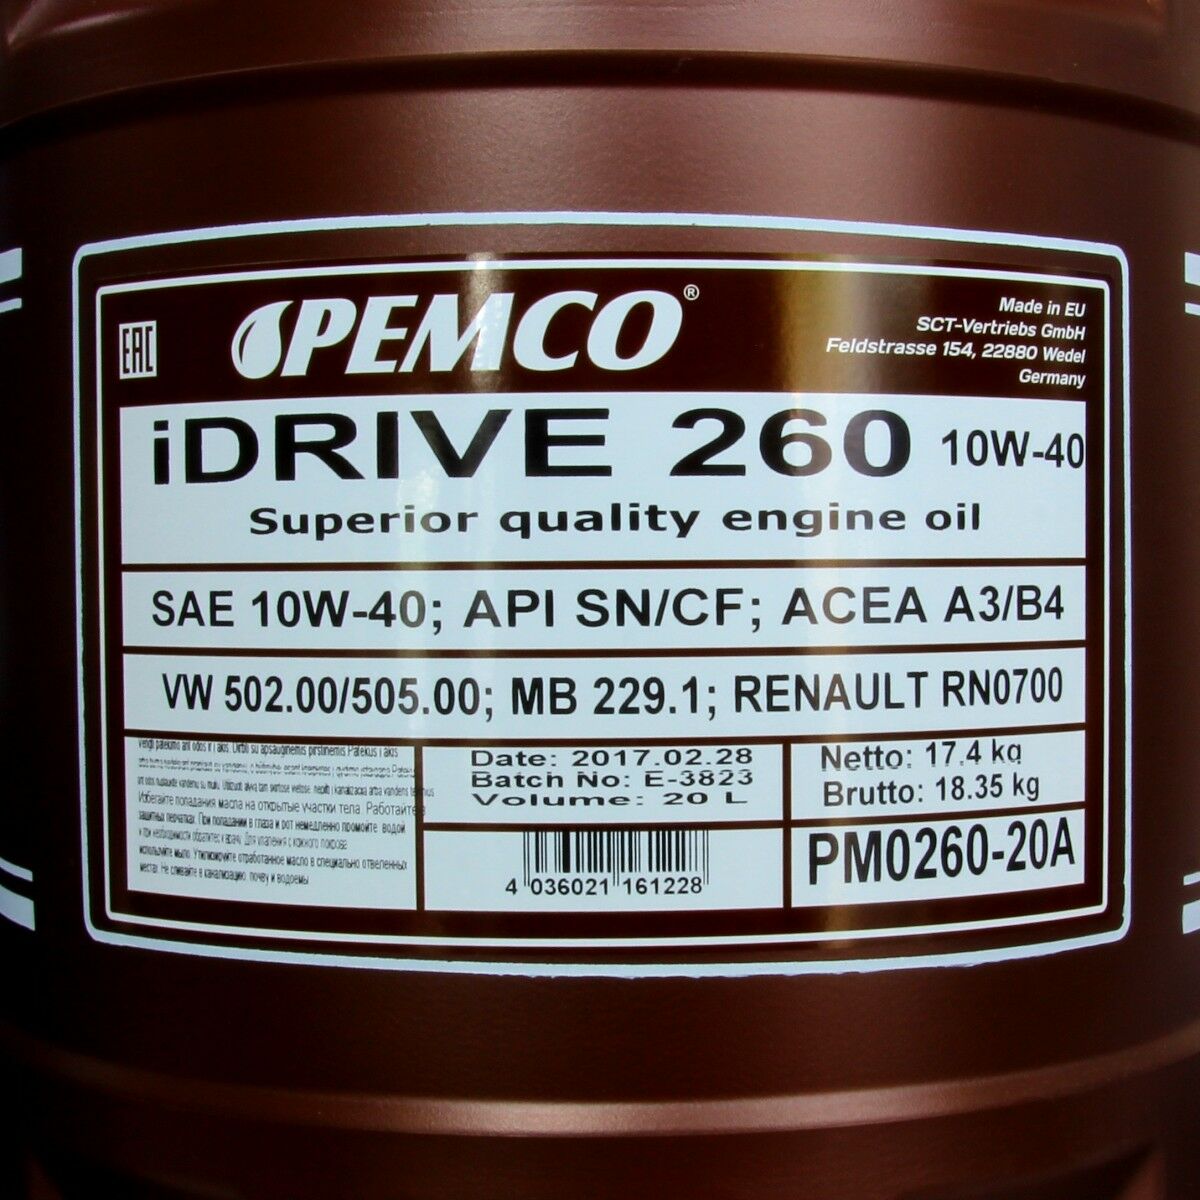 20 Liter PEMCO SAE 10W-40 iDrive 260 Motoröl - Classic Motorenöl Schmierung